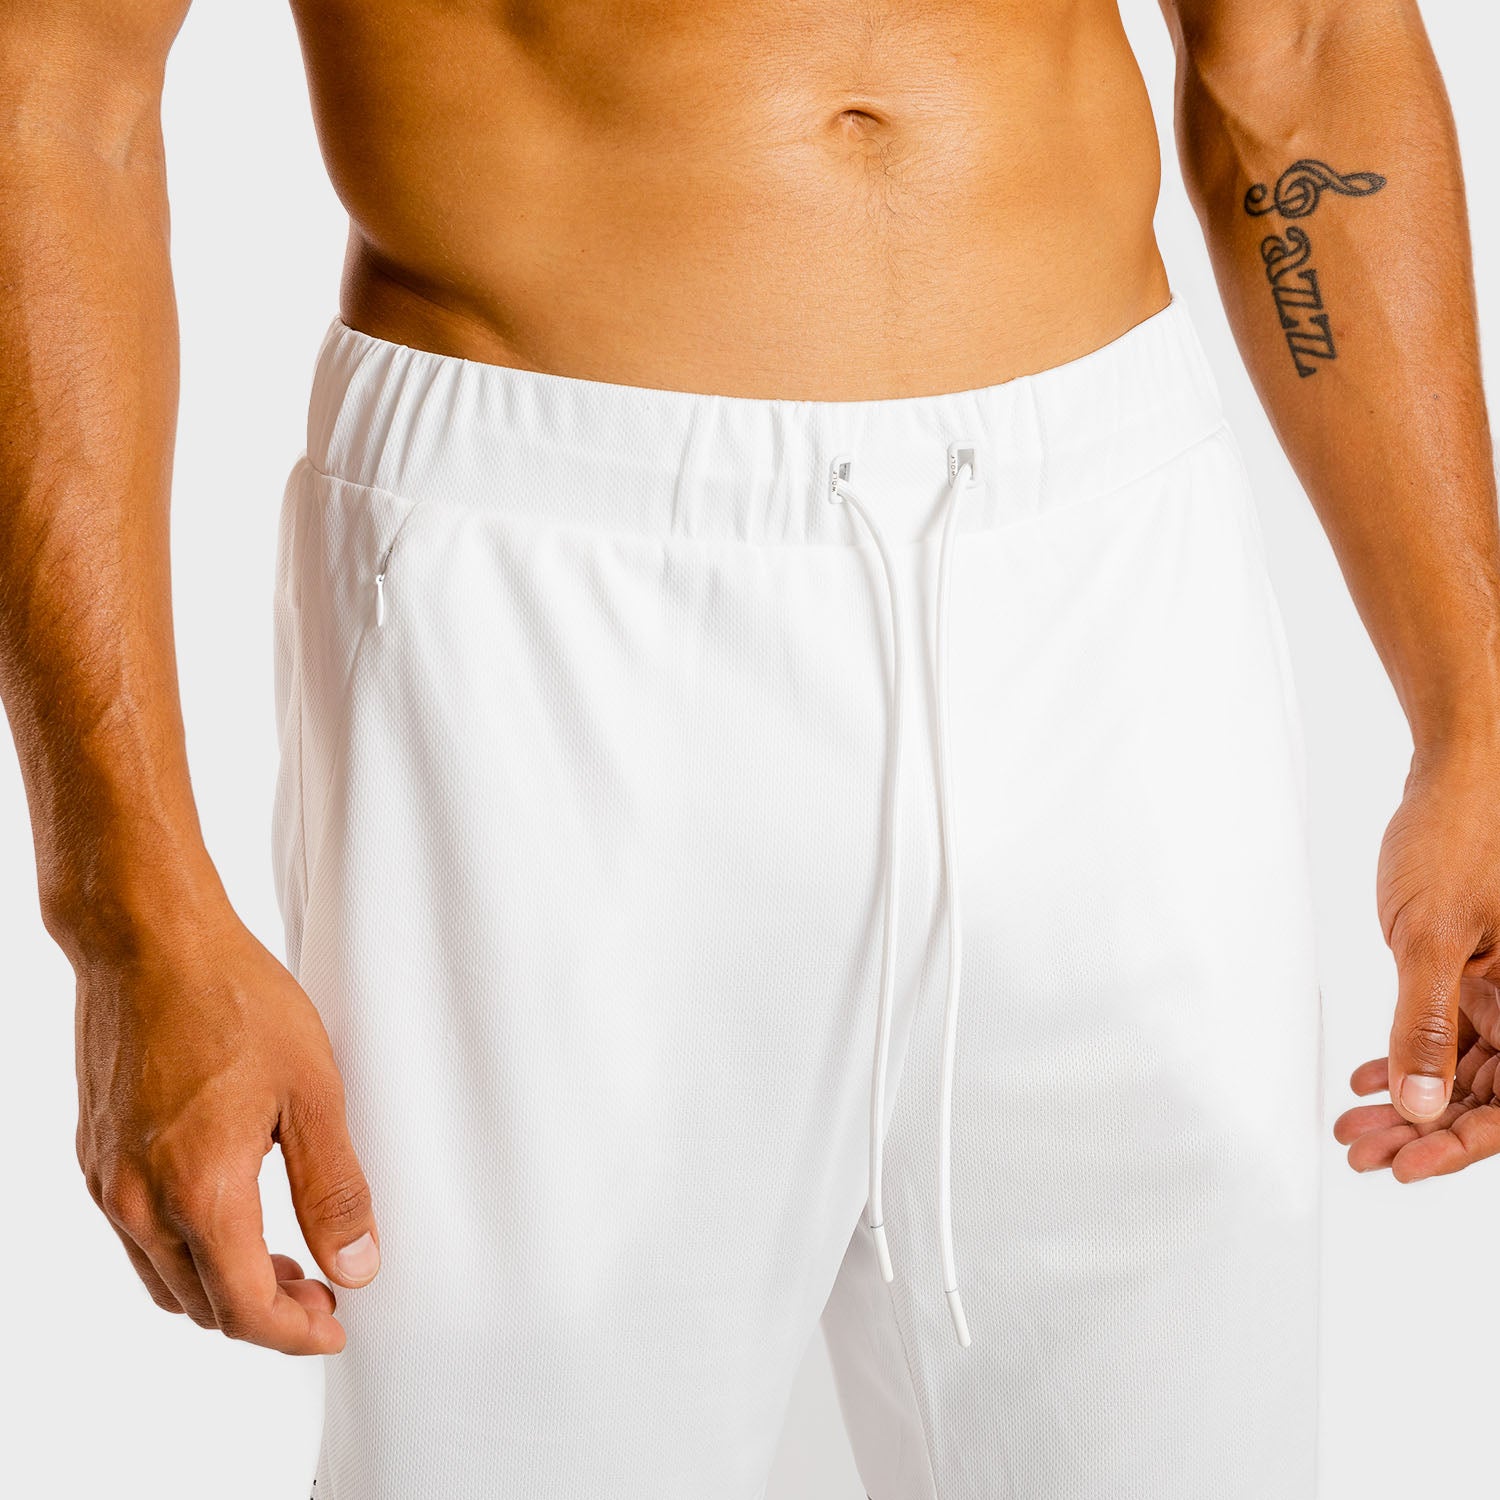 squatwolf-workout-short-for-men-flux-basketball-shorts-white-gym-wear